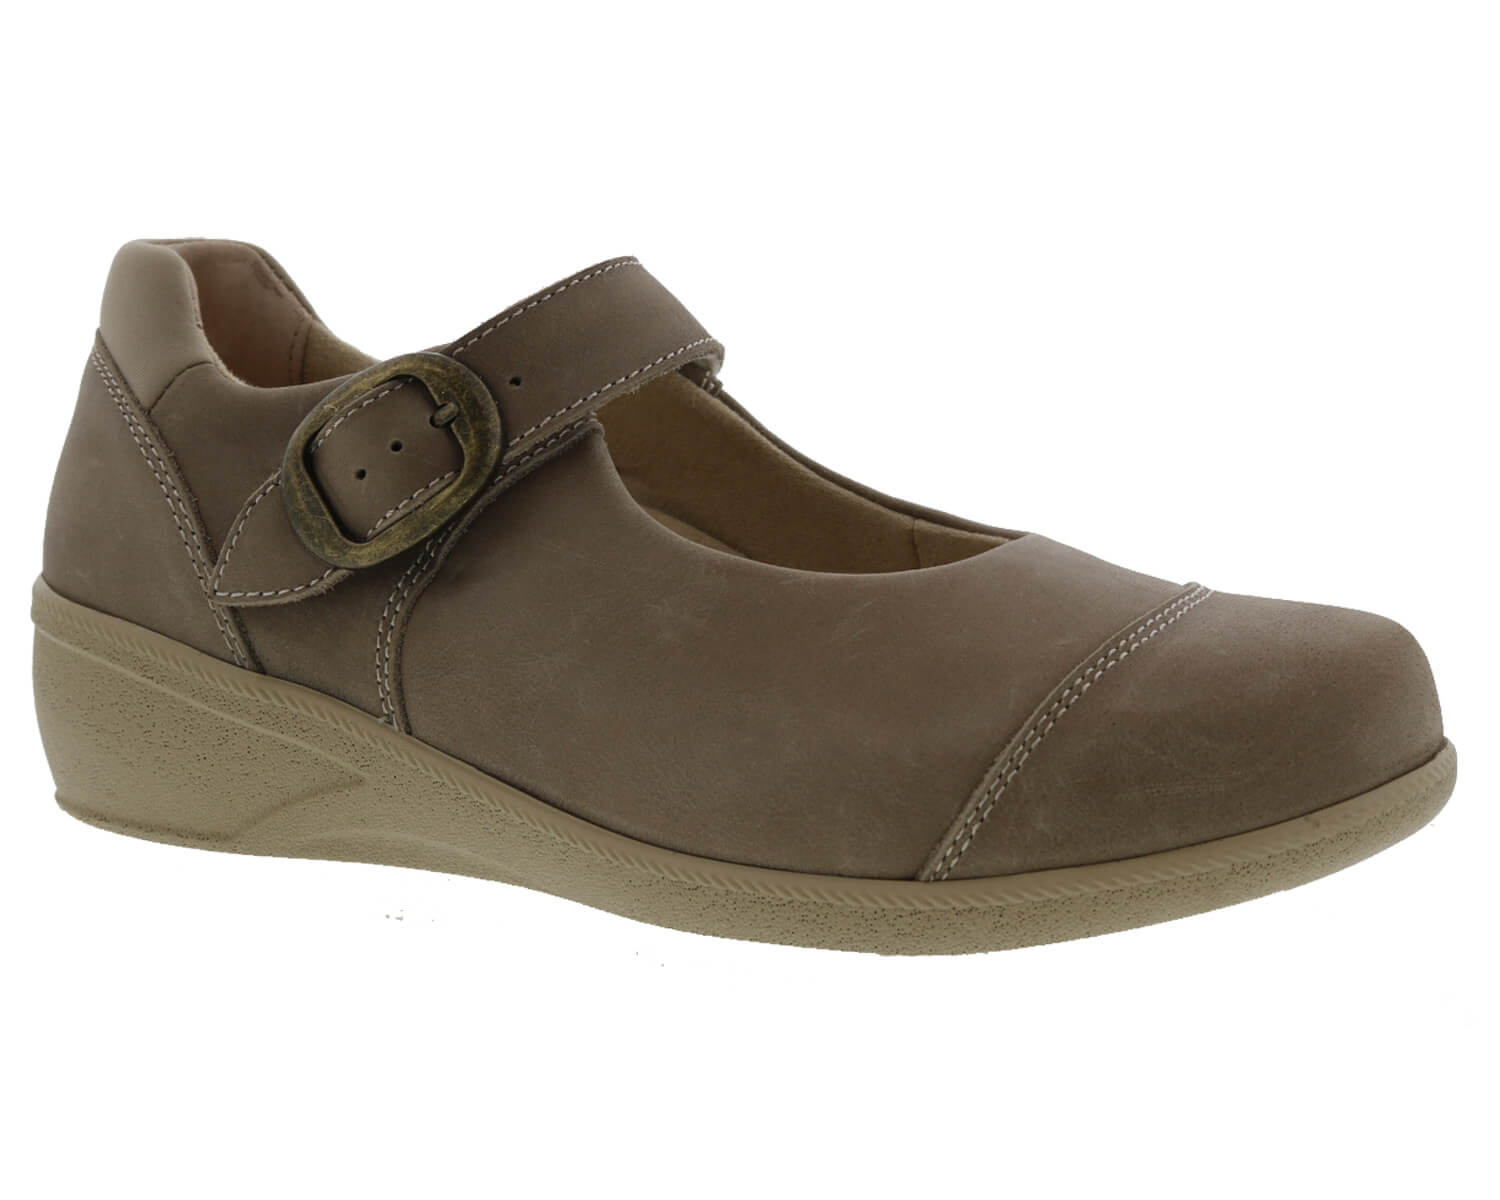 Drew Shoes Jillian 14804 - Women's Casual Shoe - Comfort Orthopedic Diabetic Shoe - Extra Depth - Extra Wide